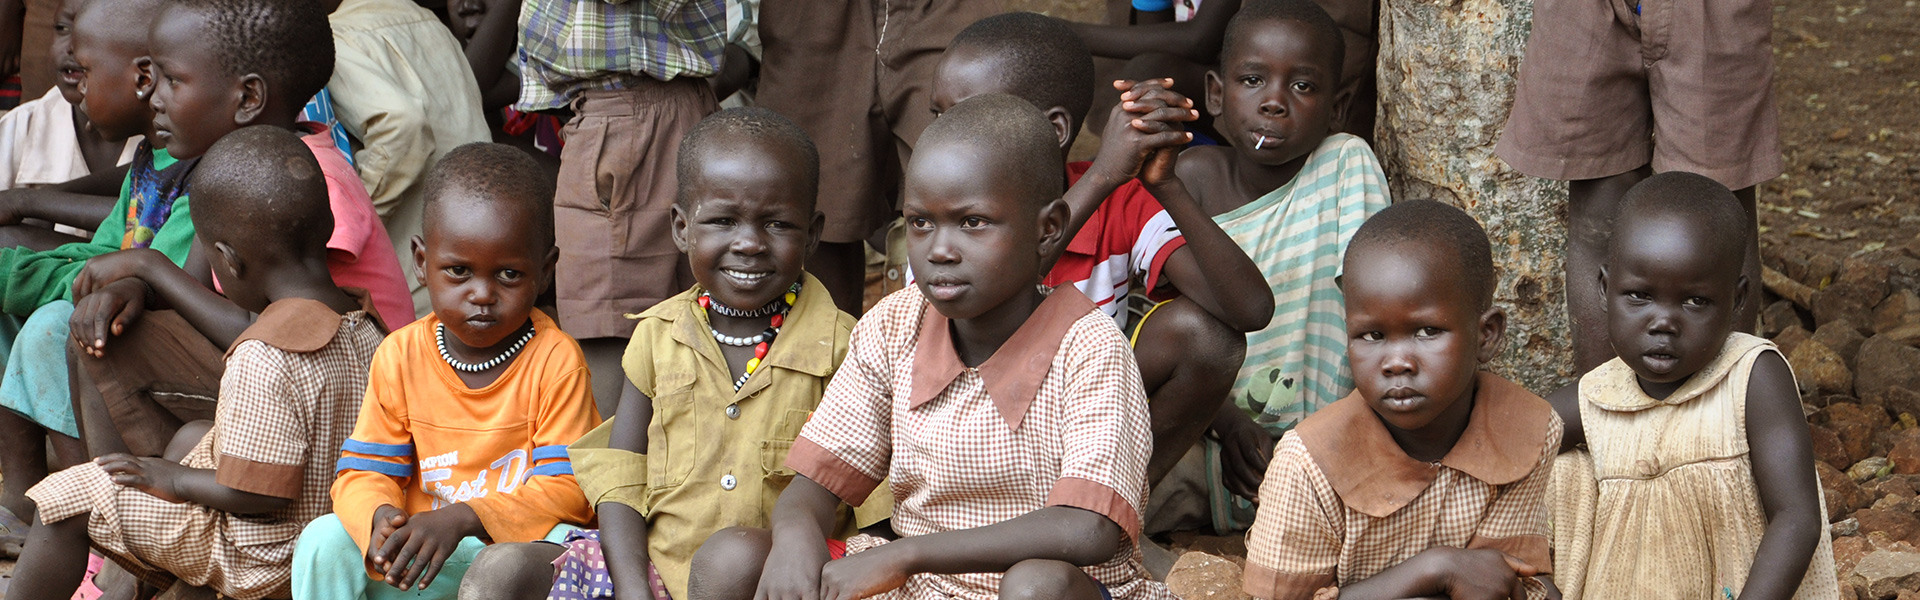 south-sudan-kuron-early-childhood-care-education-children